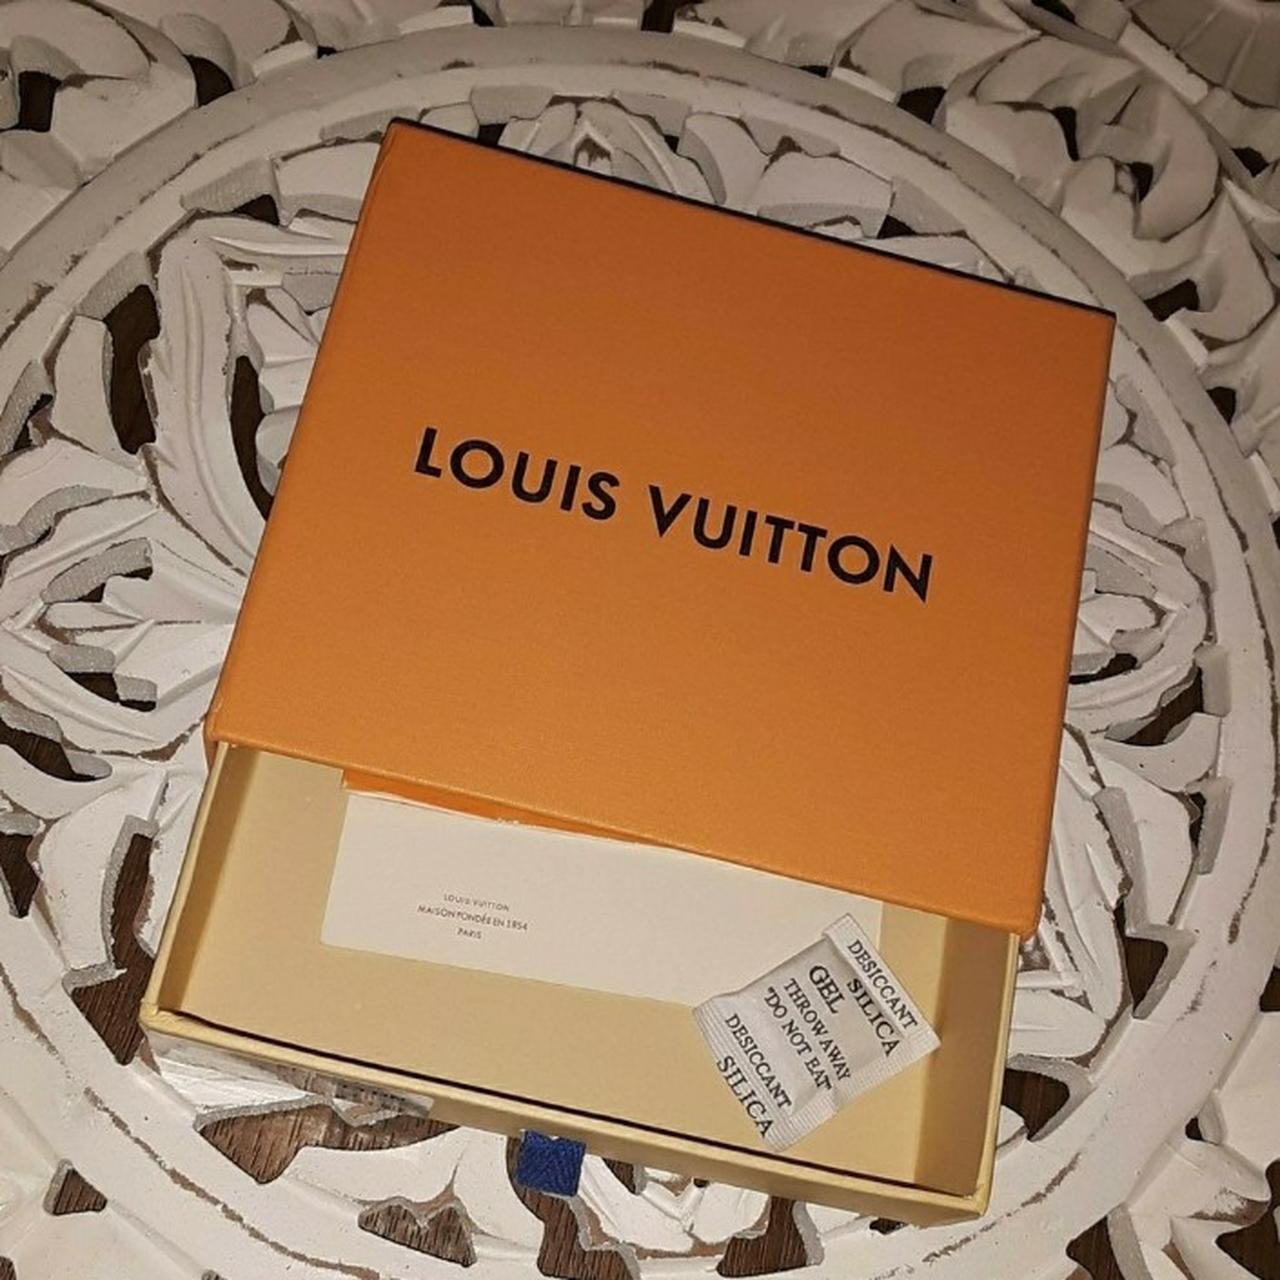 Never Worn. Authentic, iconic, Louis Vuitton Bionic - Depop